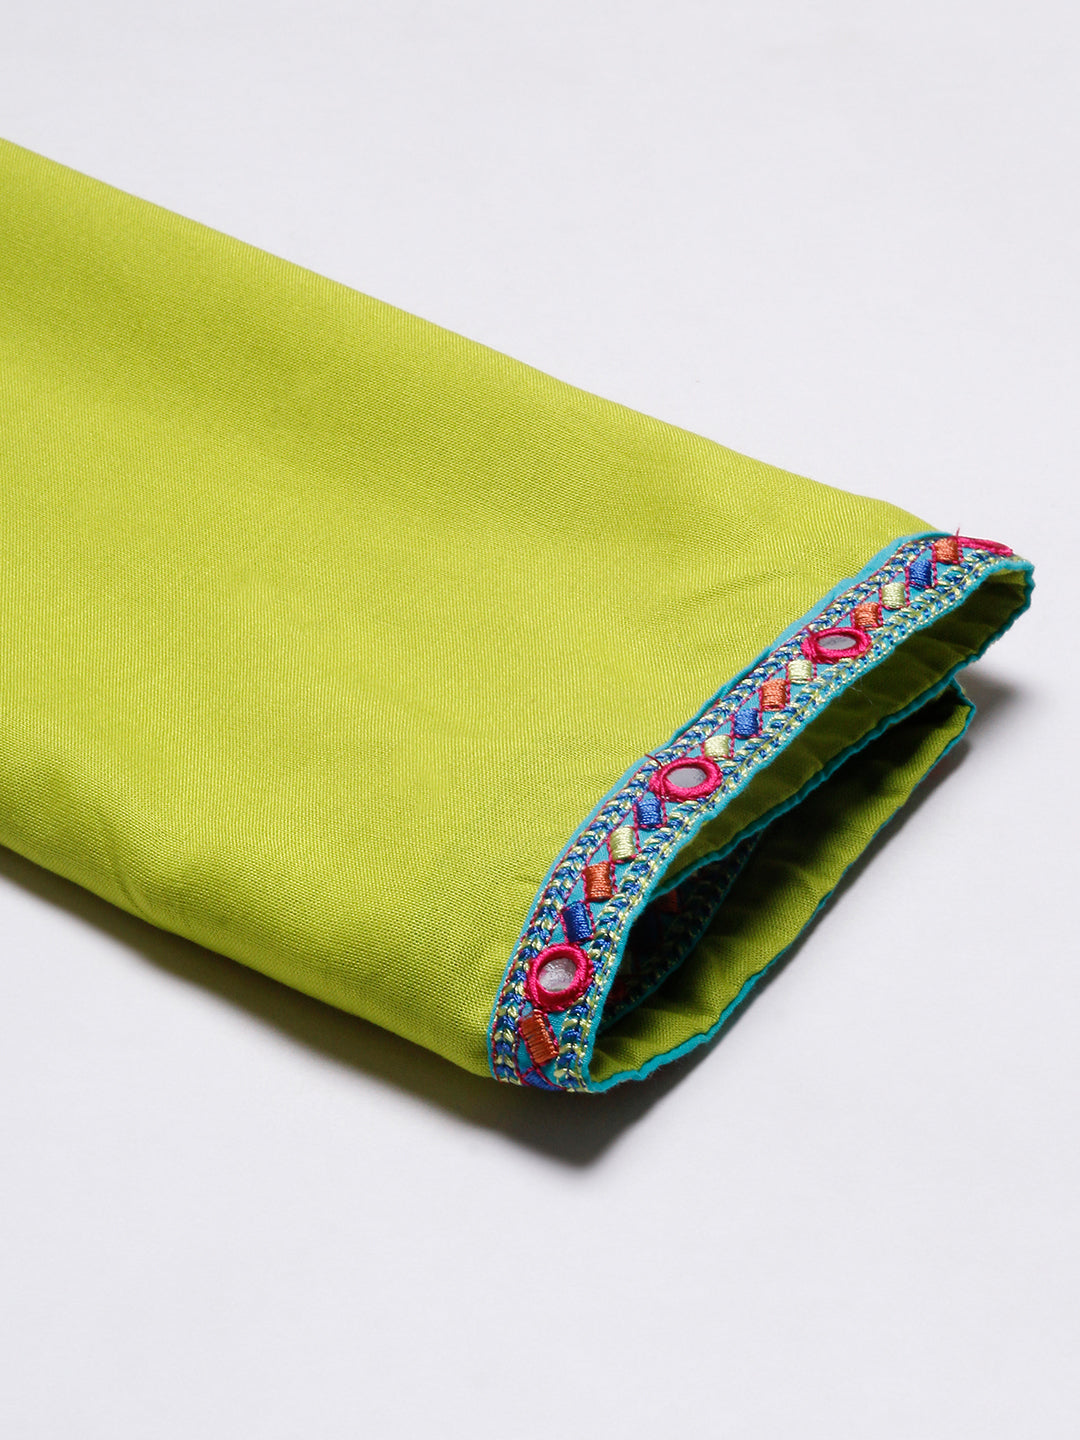 Solid Mirror & Resham Embroidered Empire Kurta With Sharara & Dupatta - Lime Green